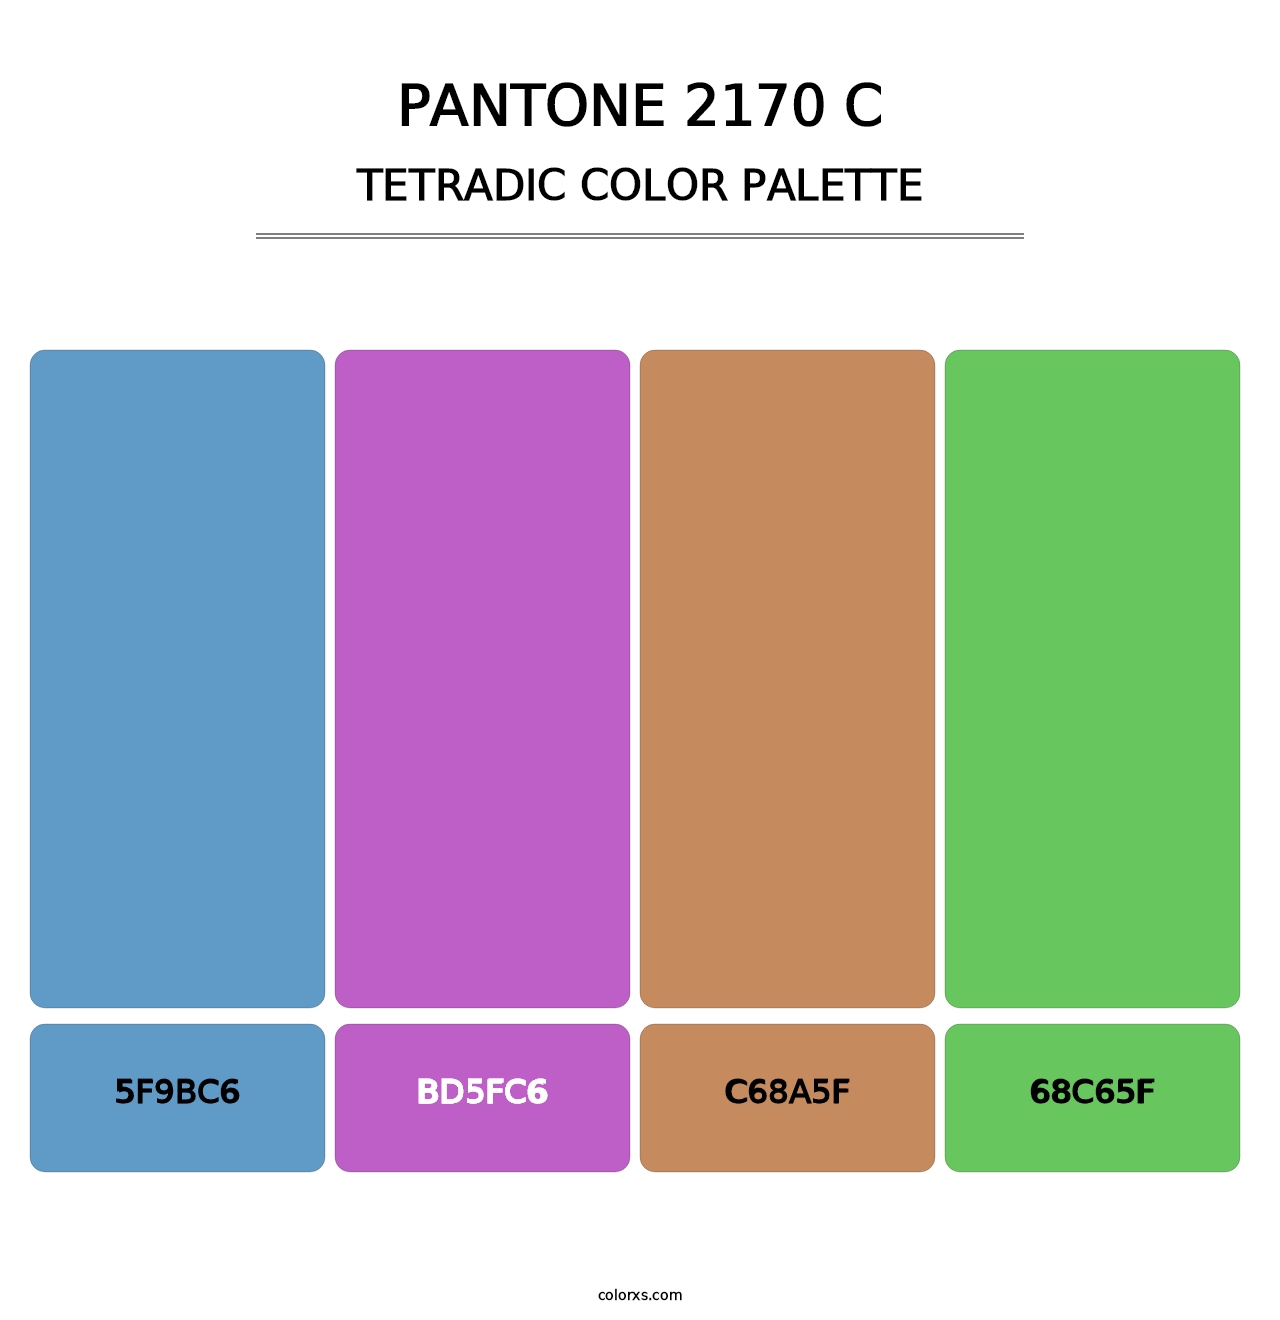 PANTONE 2170 C - Tetradic Color Palette